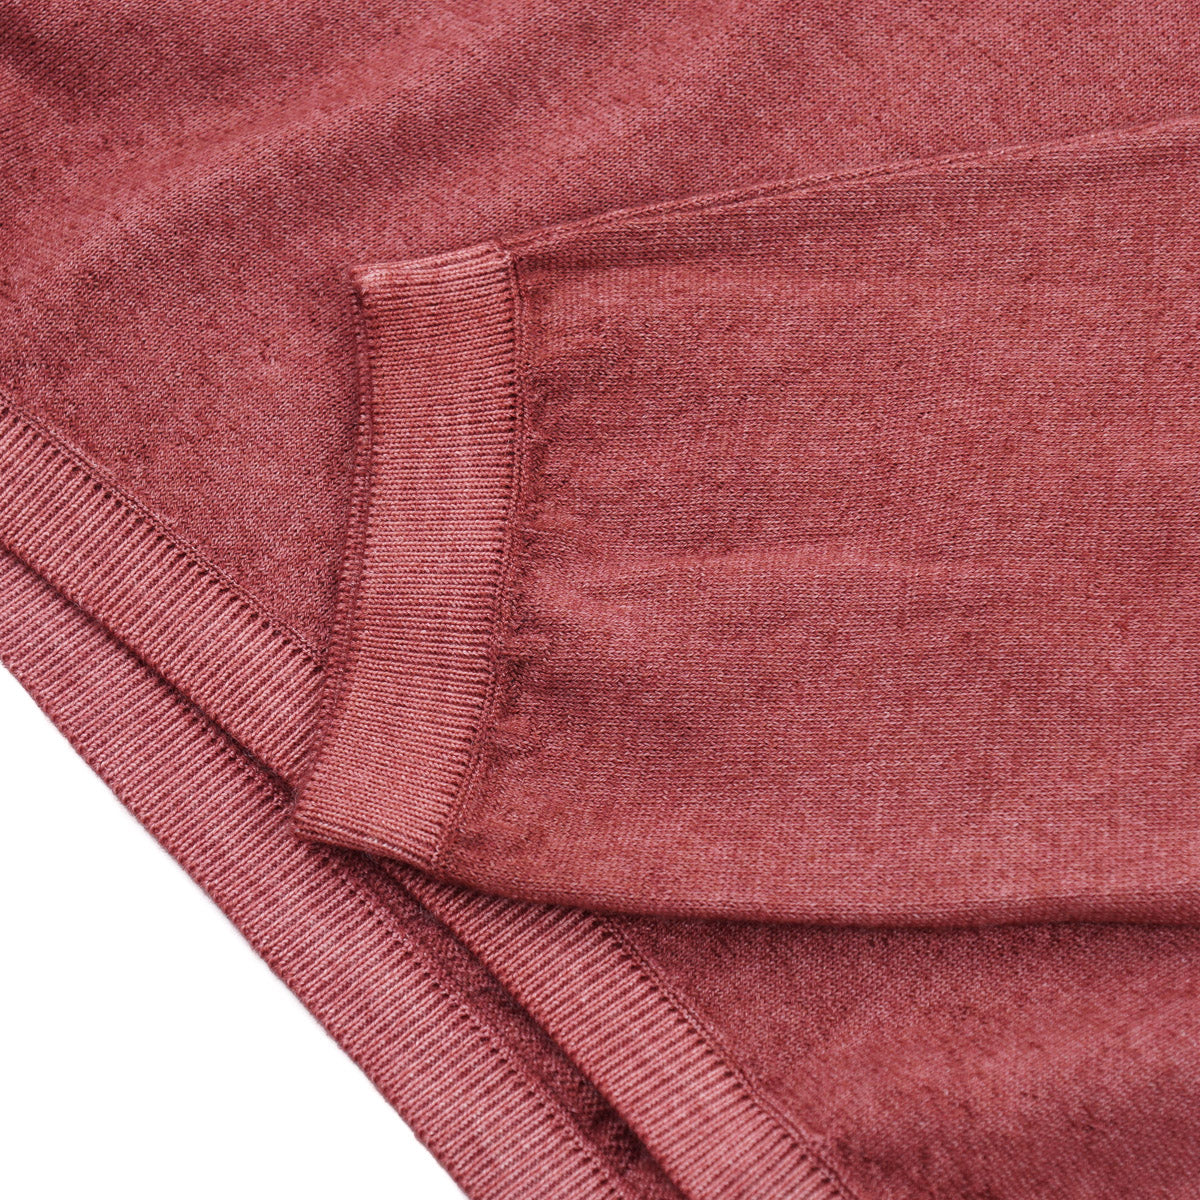 Kiton Superfine Cashmere Nuvola Sweater - Top Shelf Apparel